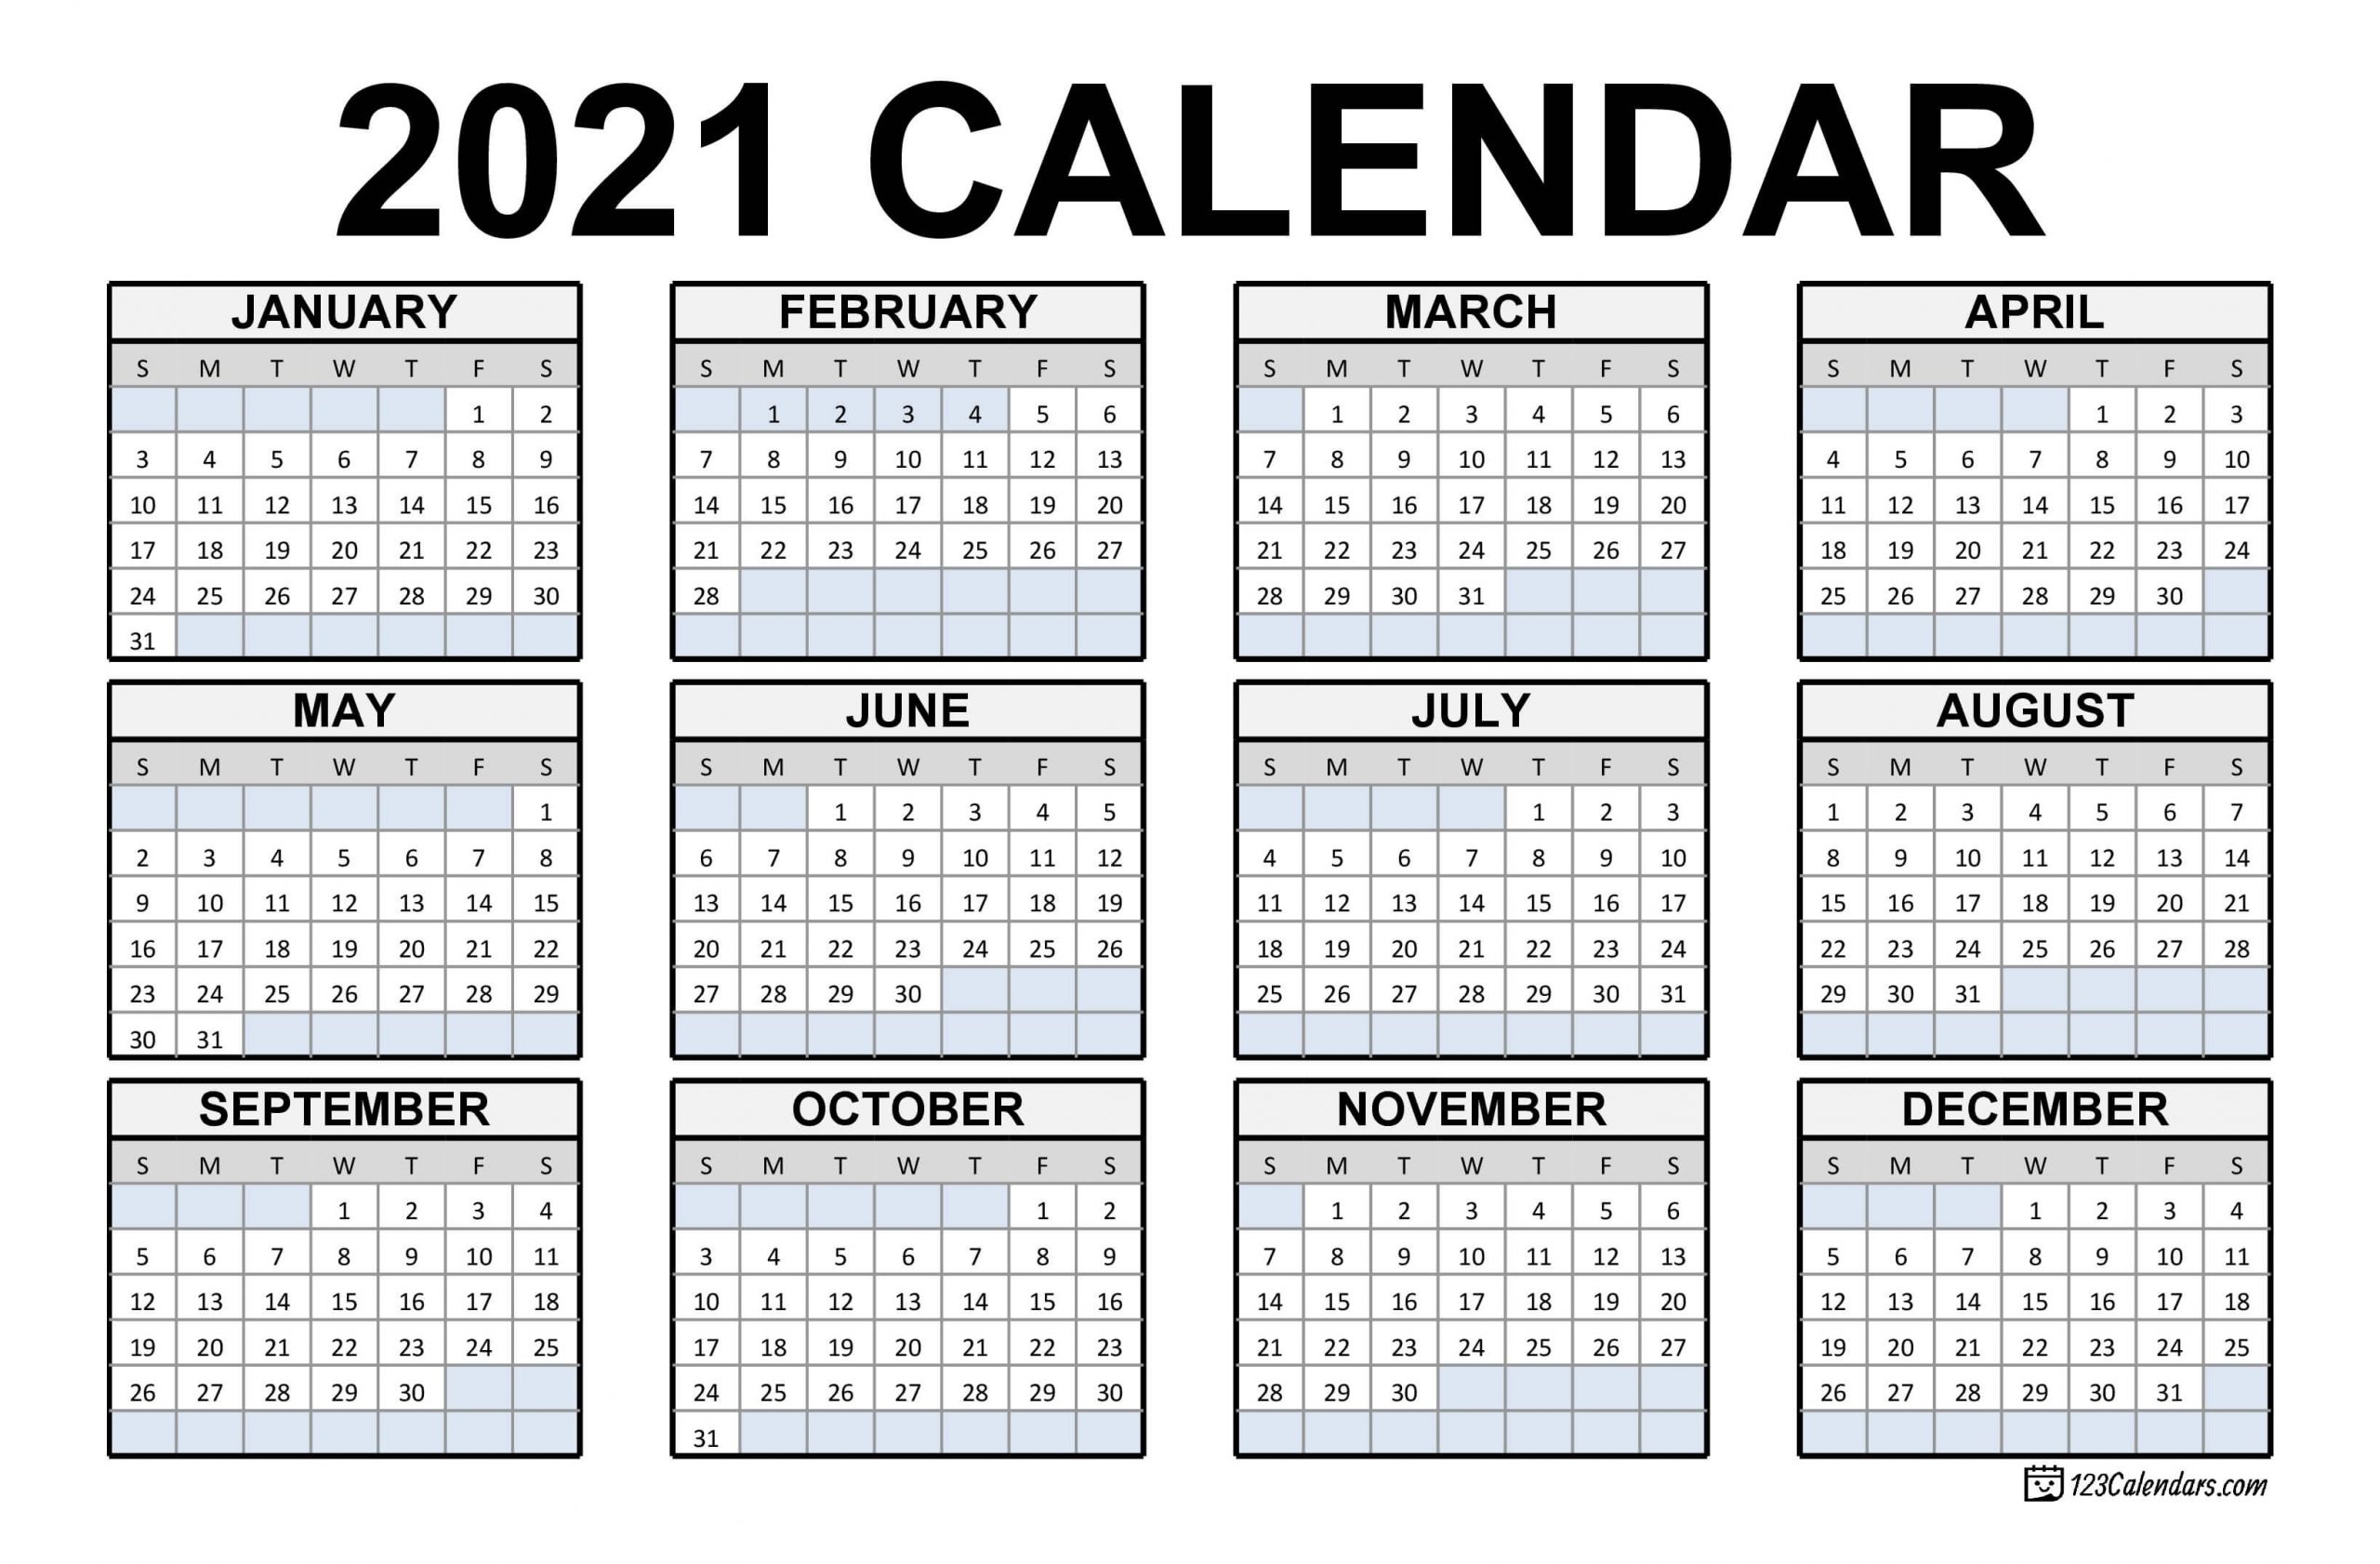 2021 Printable Calendar | 123Calendars Free Printable Calendar With Lines On Days 2021